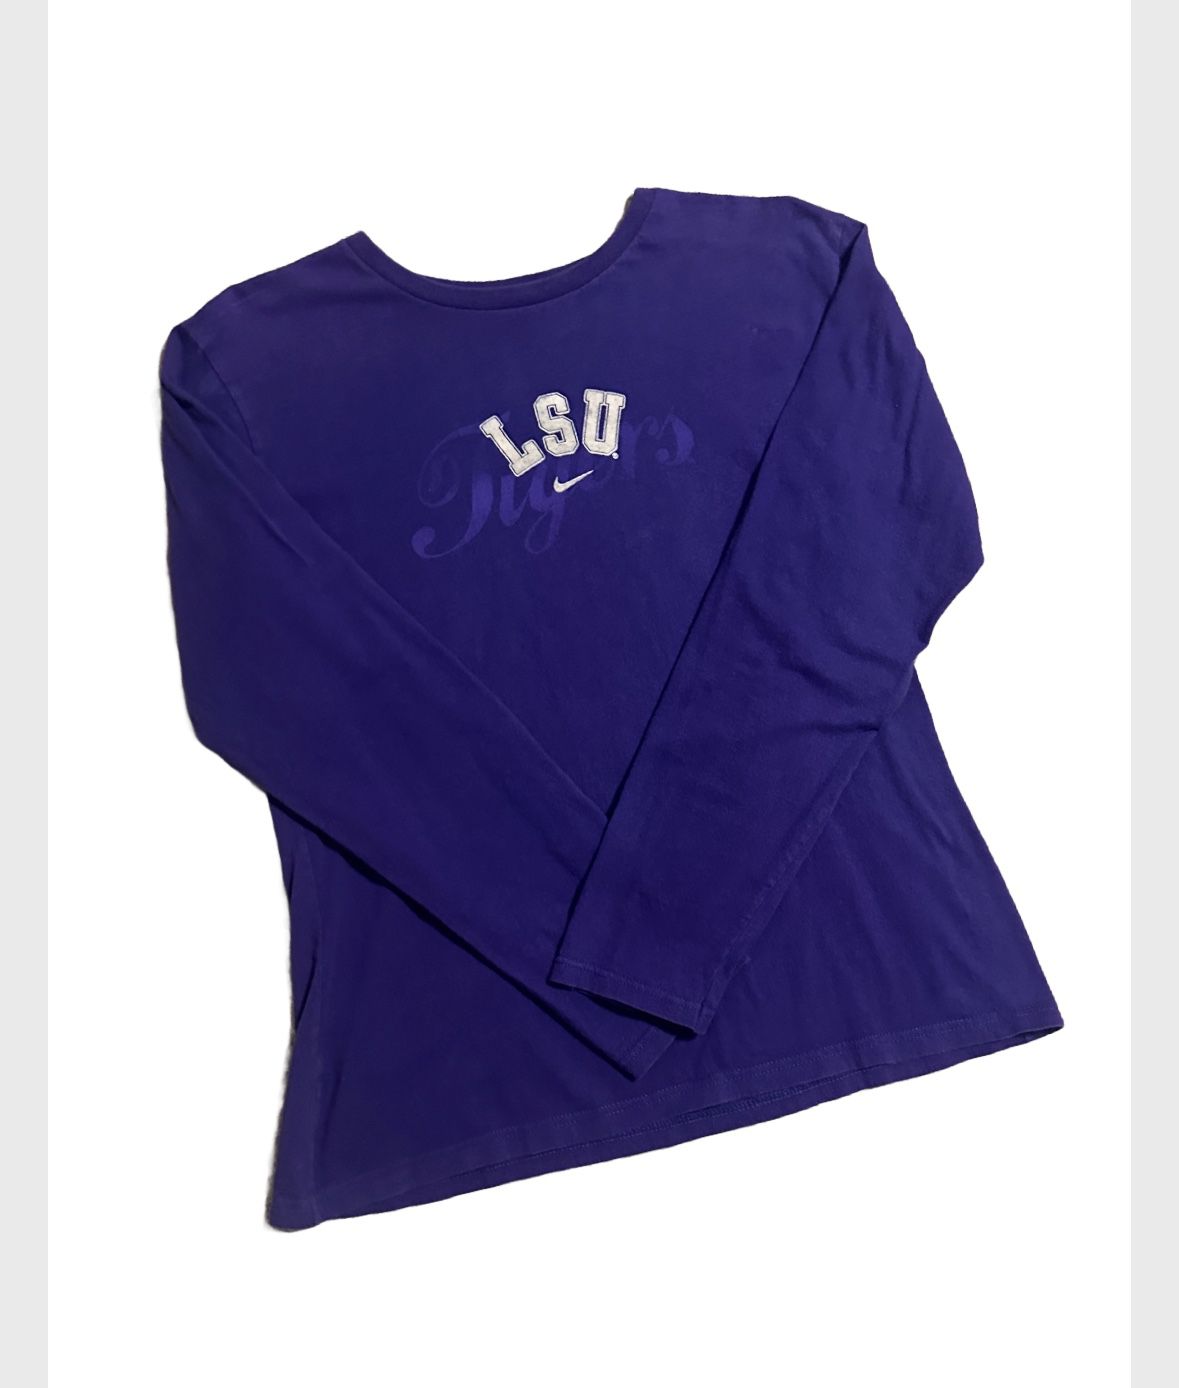 Nike LSU Long Sleeve Purple Tshirt Size XL LSU Tigers 100% Cotton Women’s